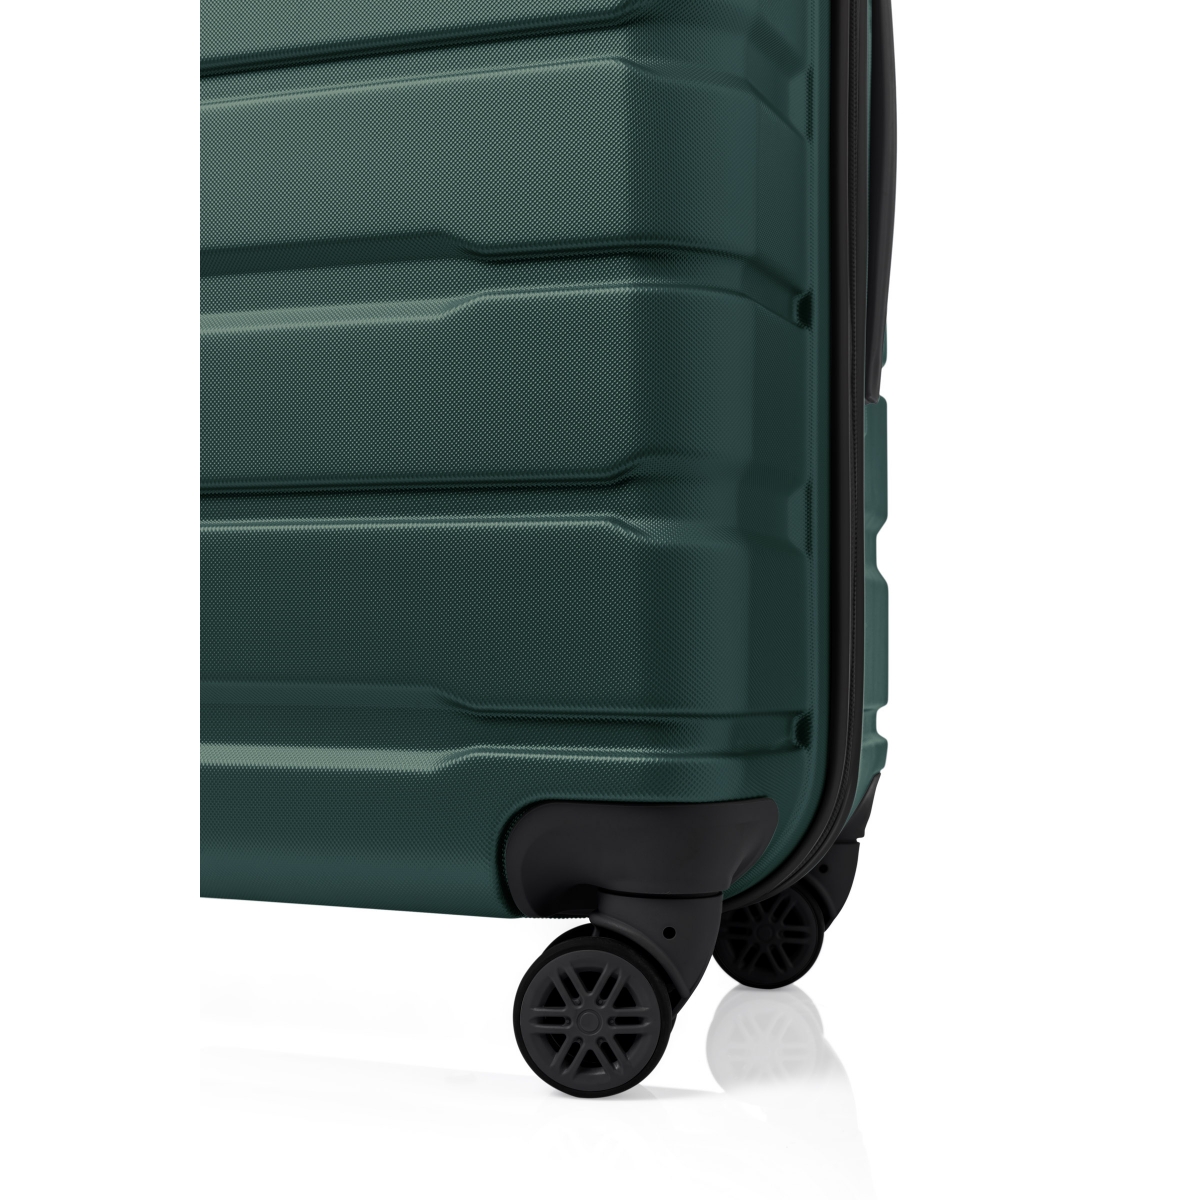 Gedox Abs Premium Tonaton 3'lü Valiz Seyahat Seti - Model:500.07 Haki Yeşil